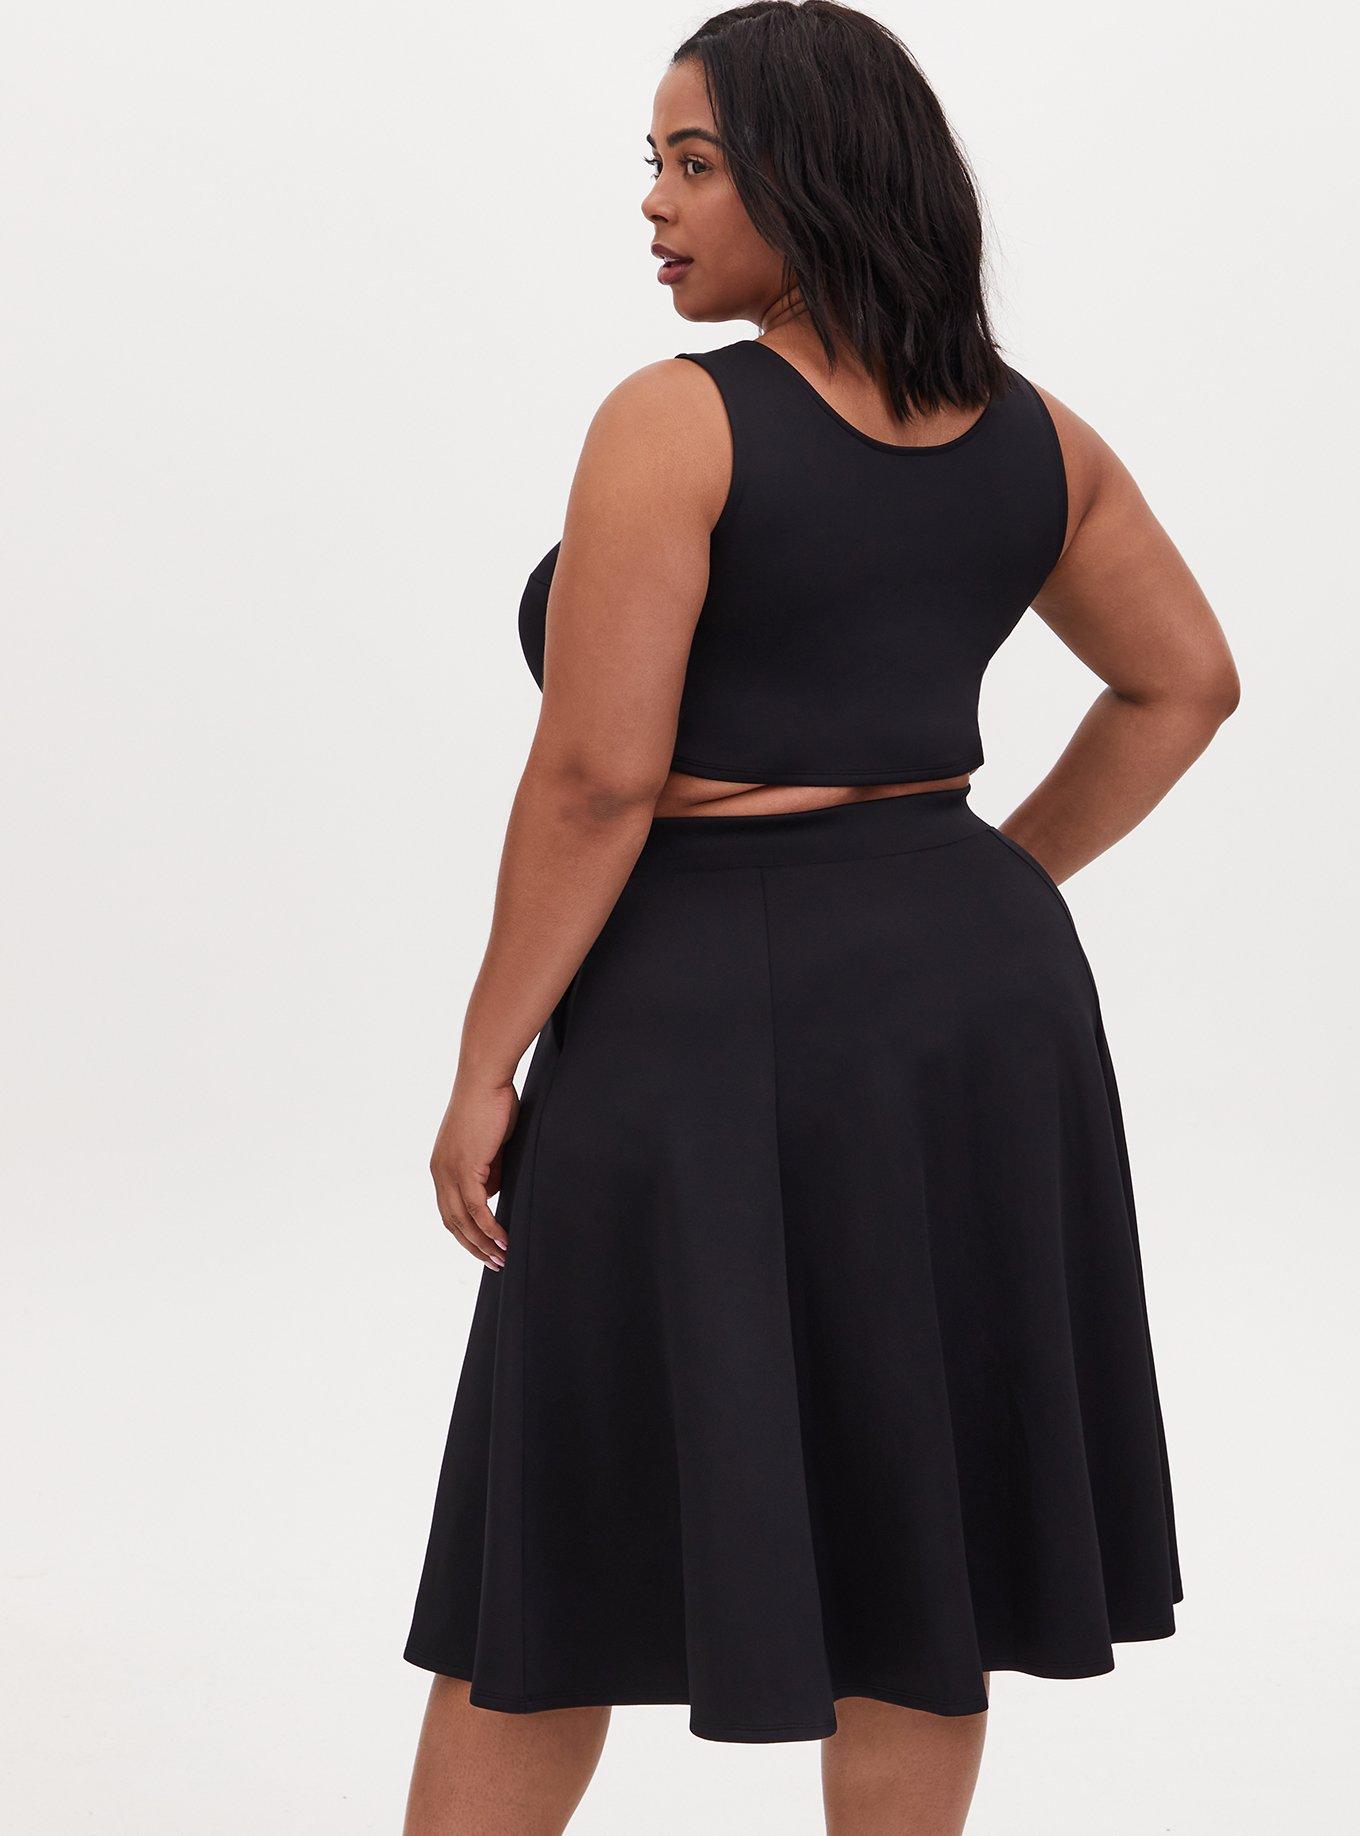 Plus Size - Black Scuba Knit Crop Top & Midi Skirt Set - Torrid